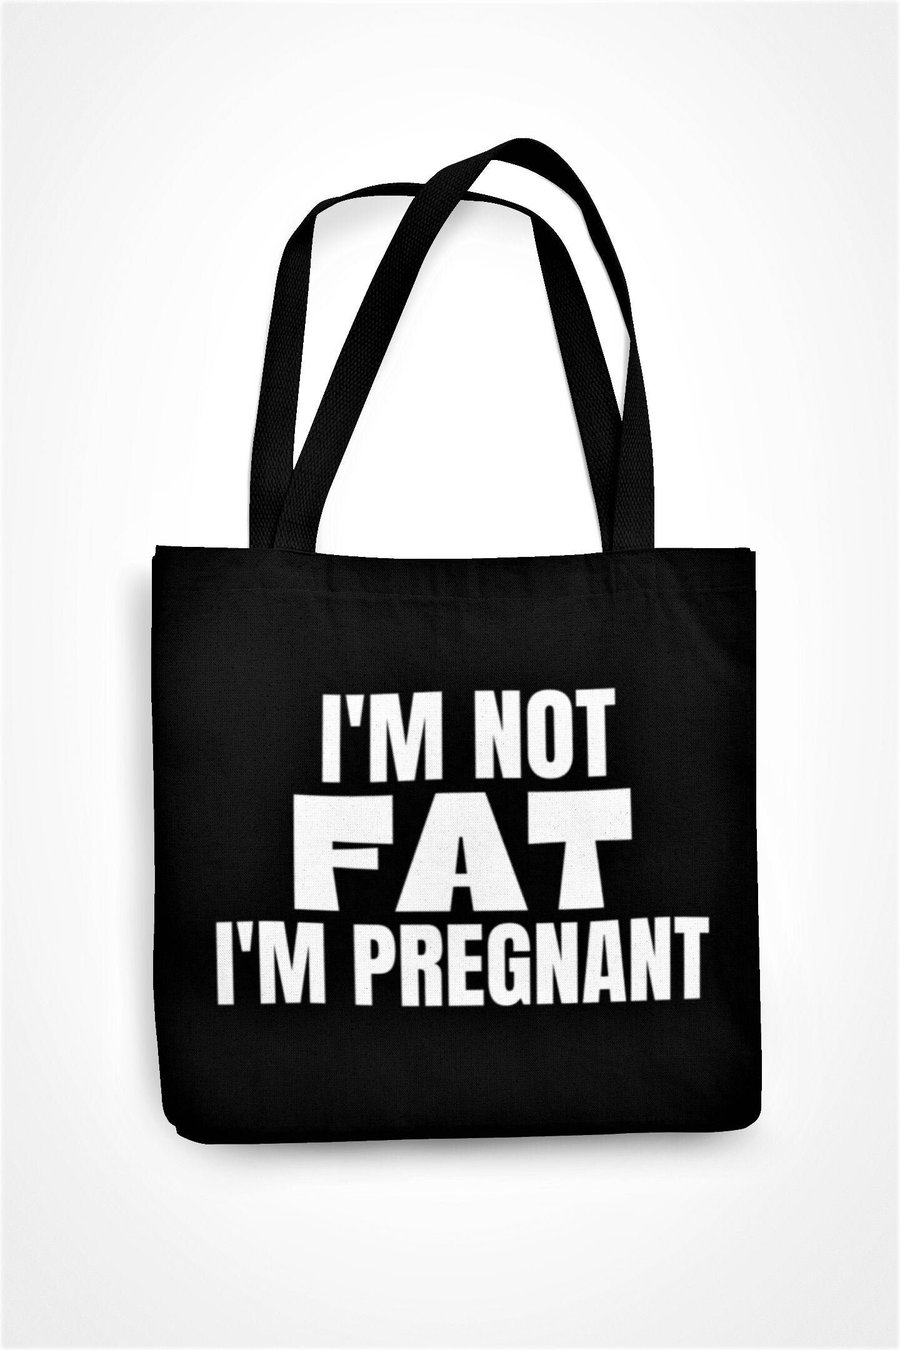 I'm Not Fat I'm Pregnant Tote Bag Sassy Funny Novelty Gift Pregnancy Joke 